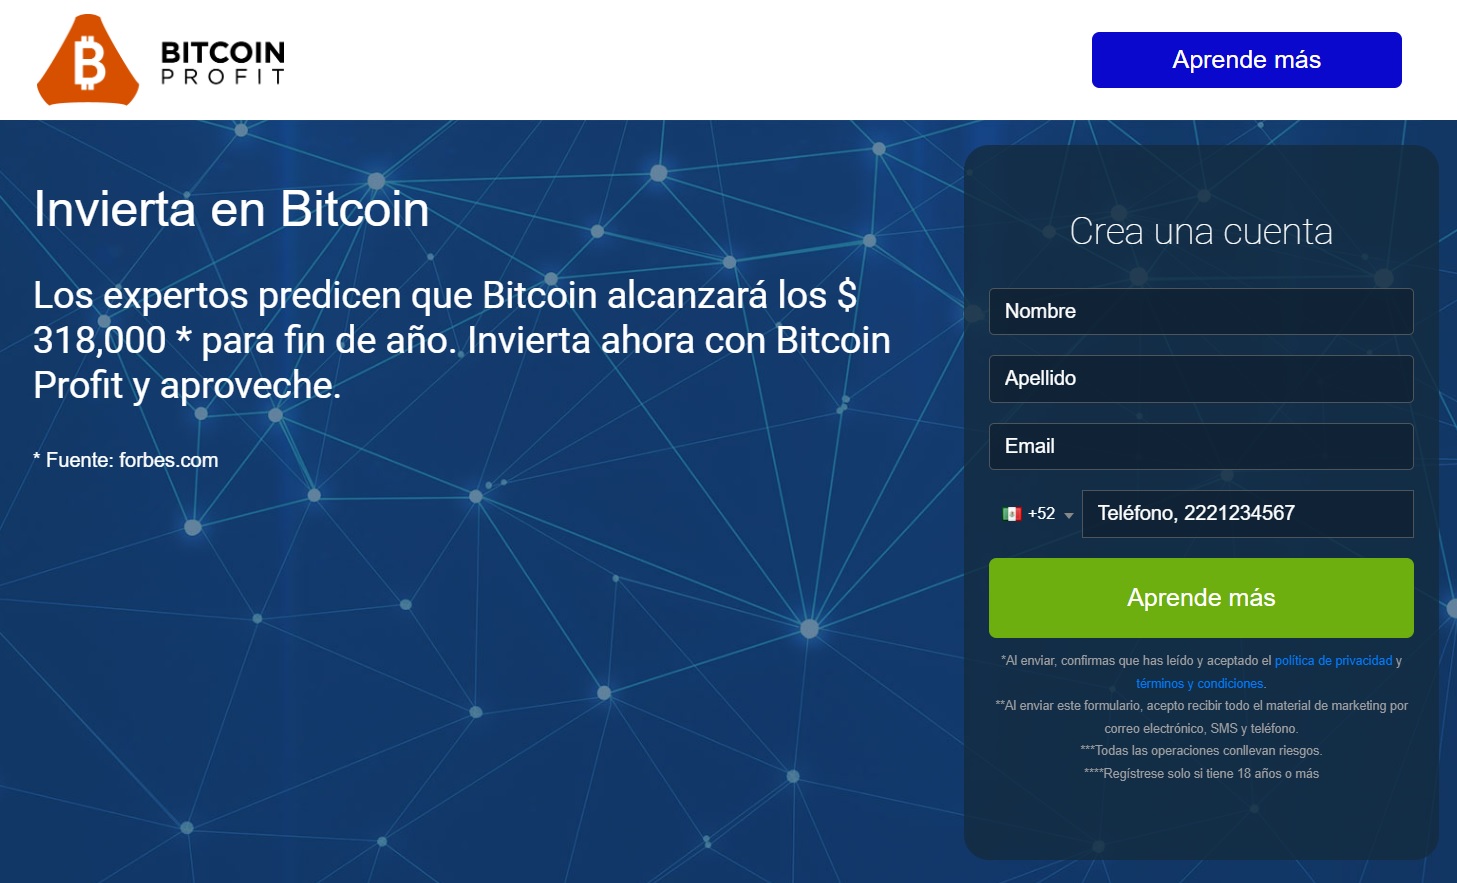 Bitcon Profit webpage